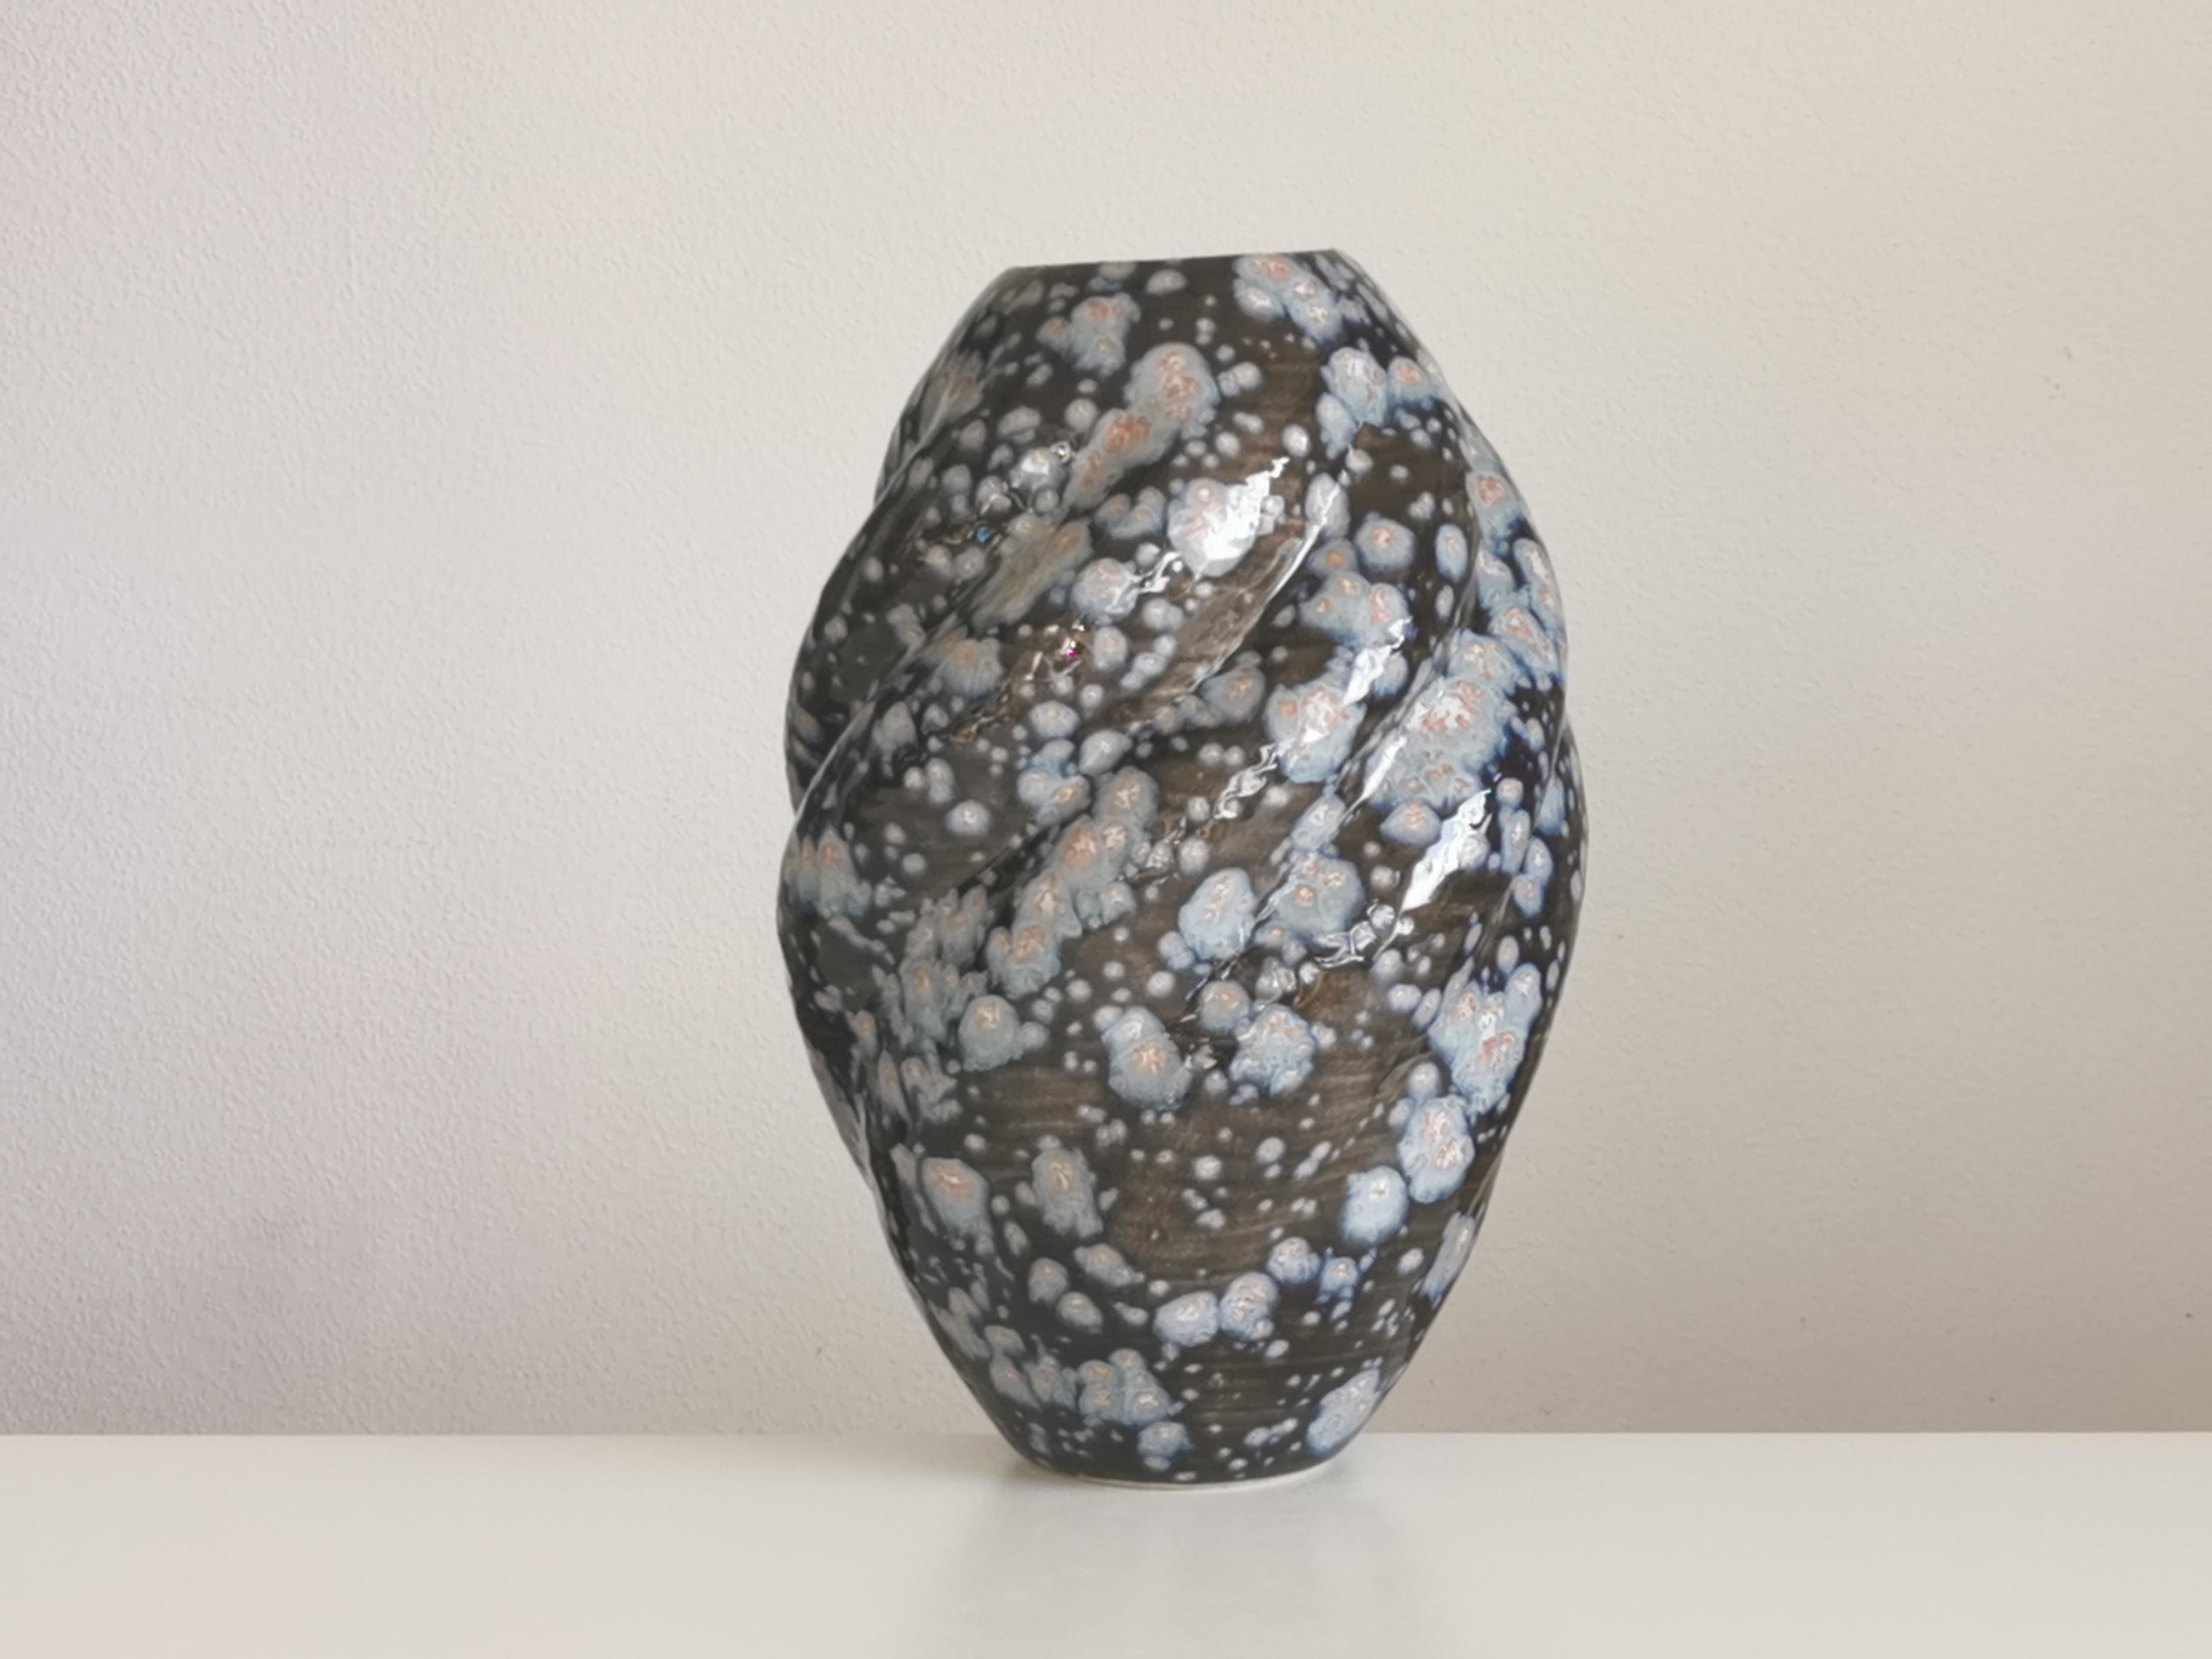 Organic Modern Wave Form with Blue Galaxy Glaze N.90, Ceramic Sculpture Vessel